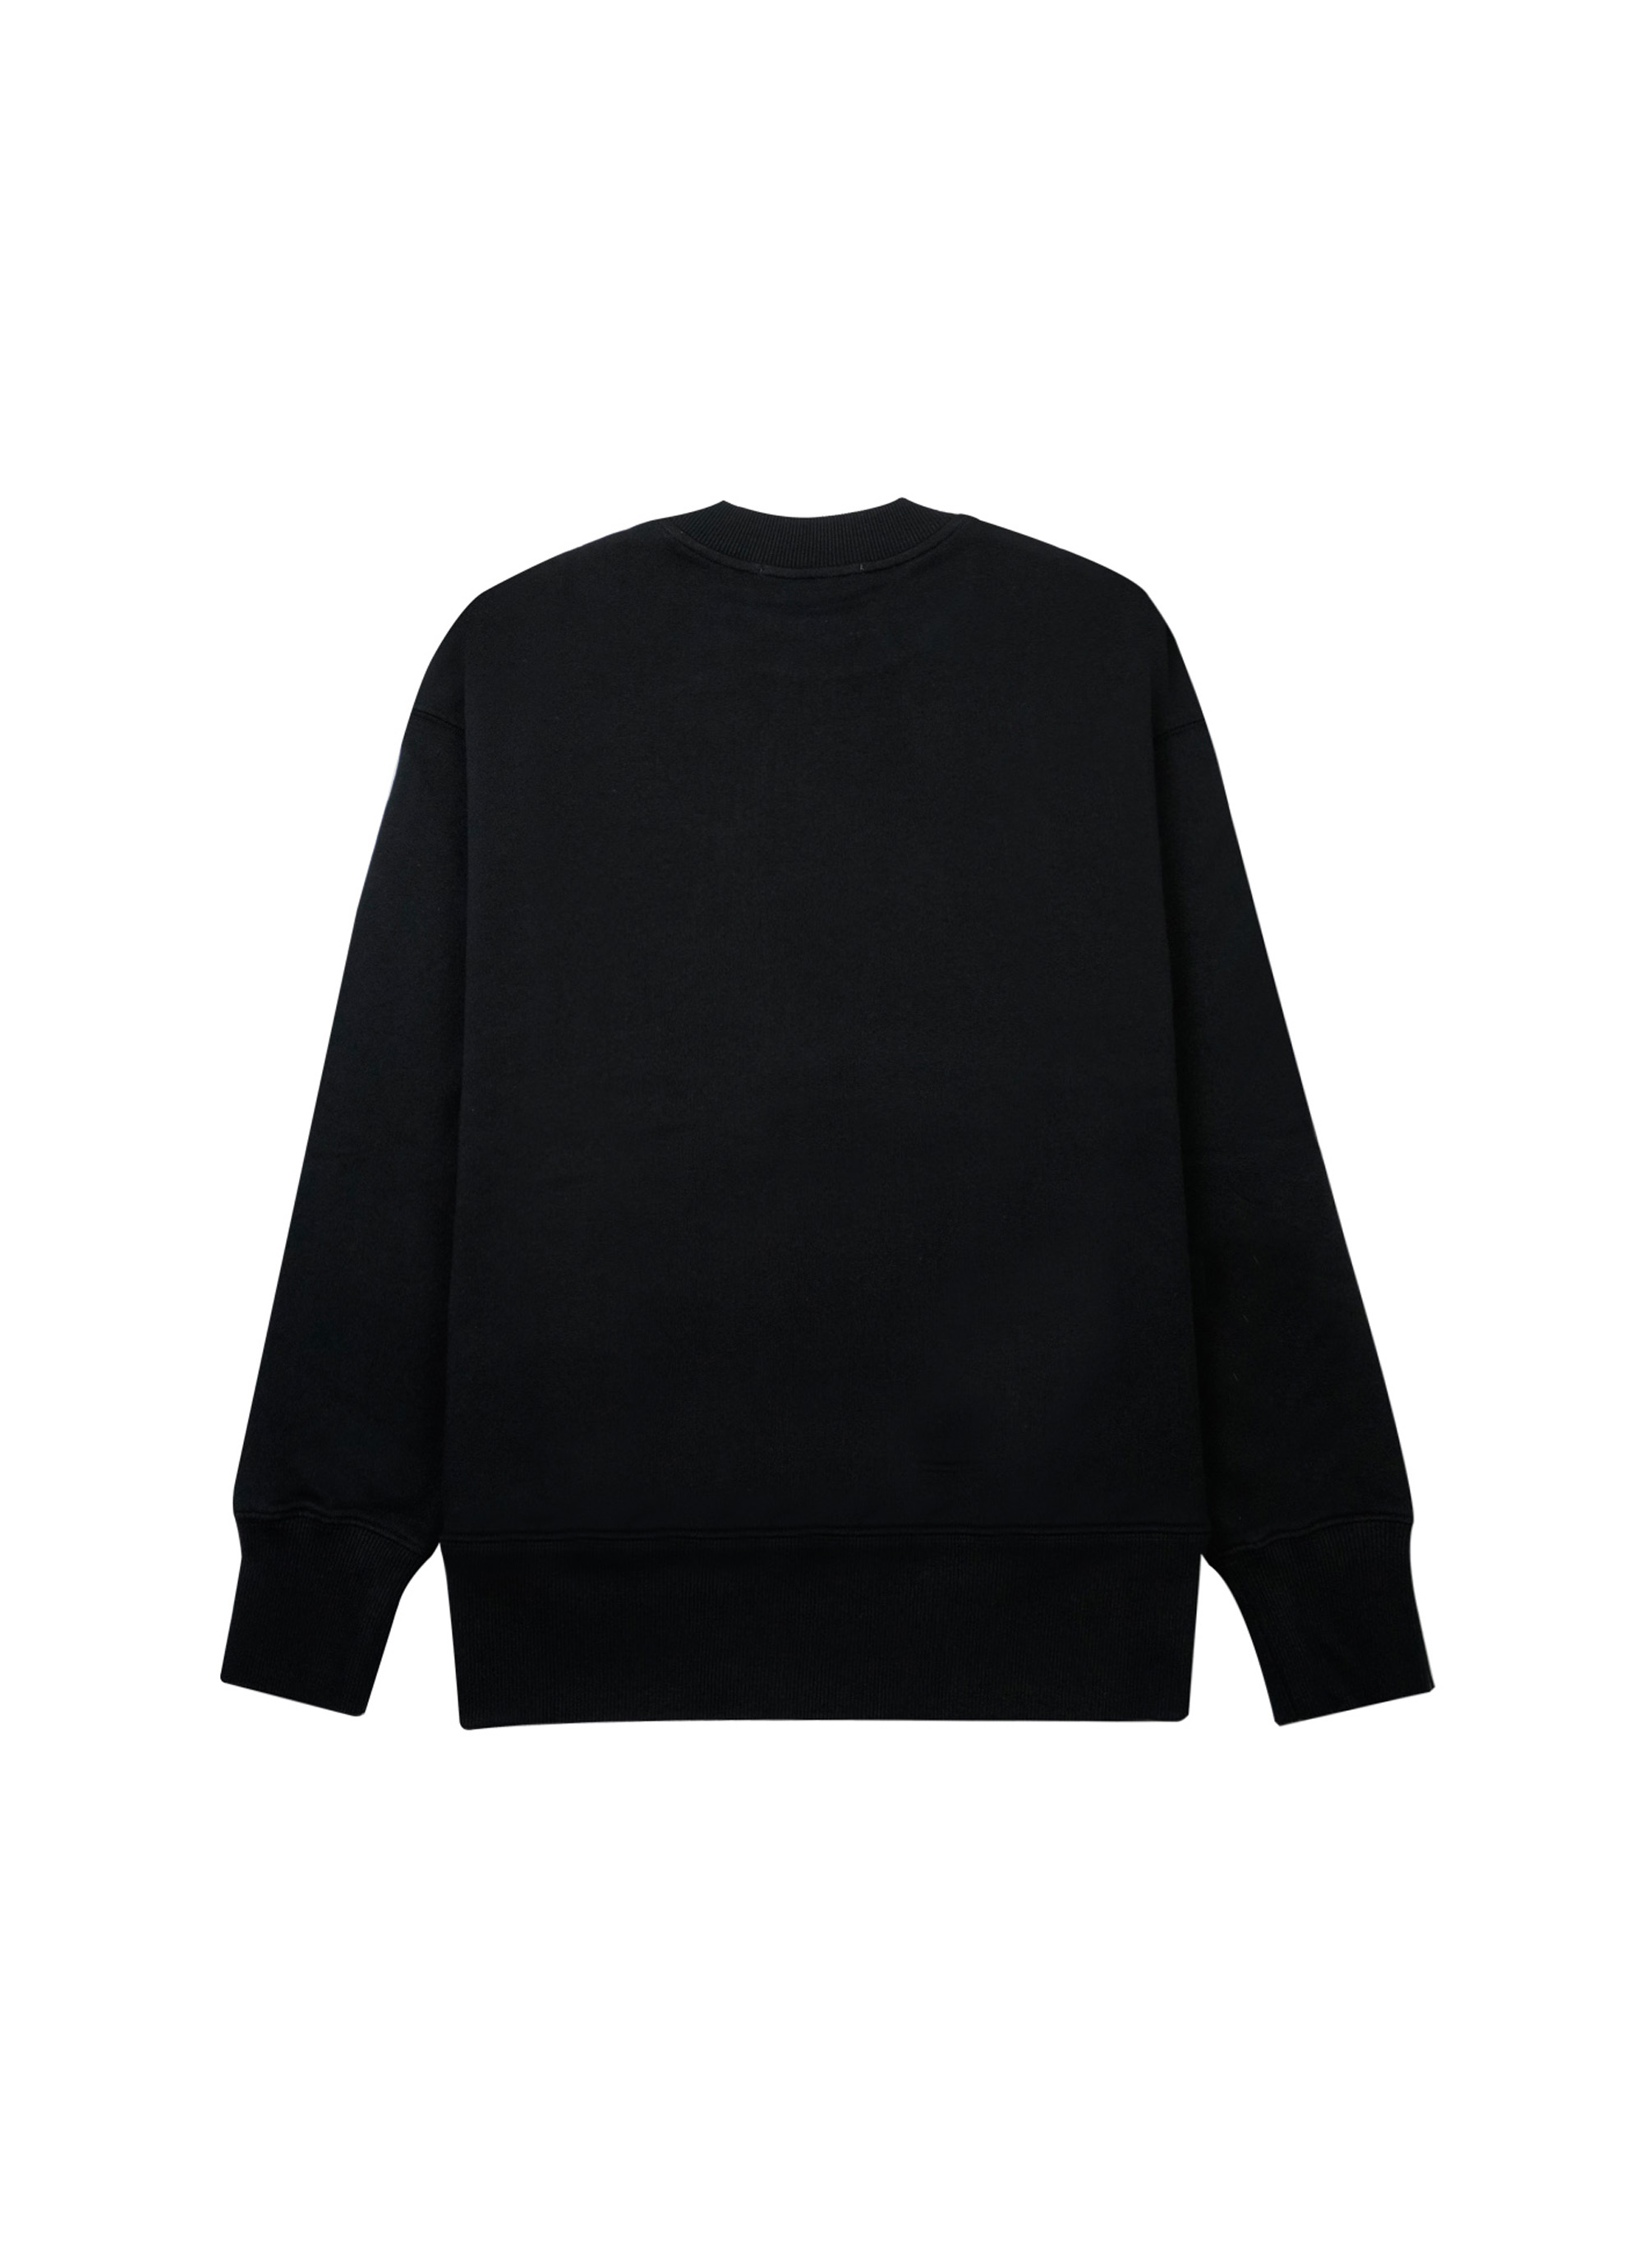 【NEW】ブラッシュストローク スウェットシャツ 詳細画像 ブラック 2